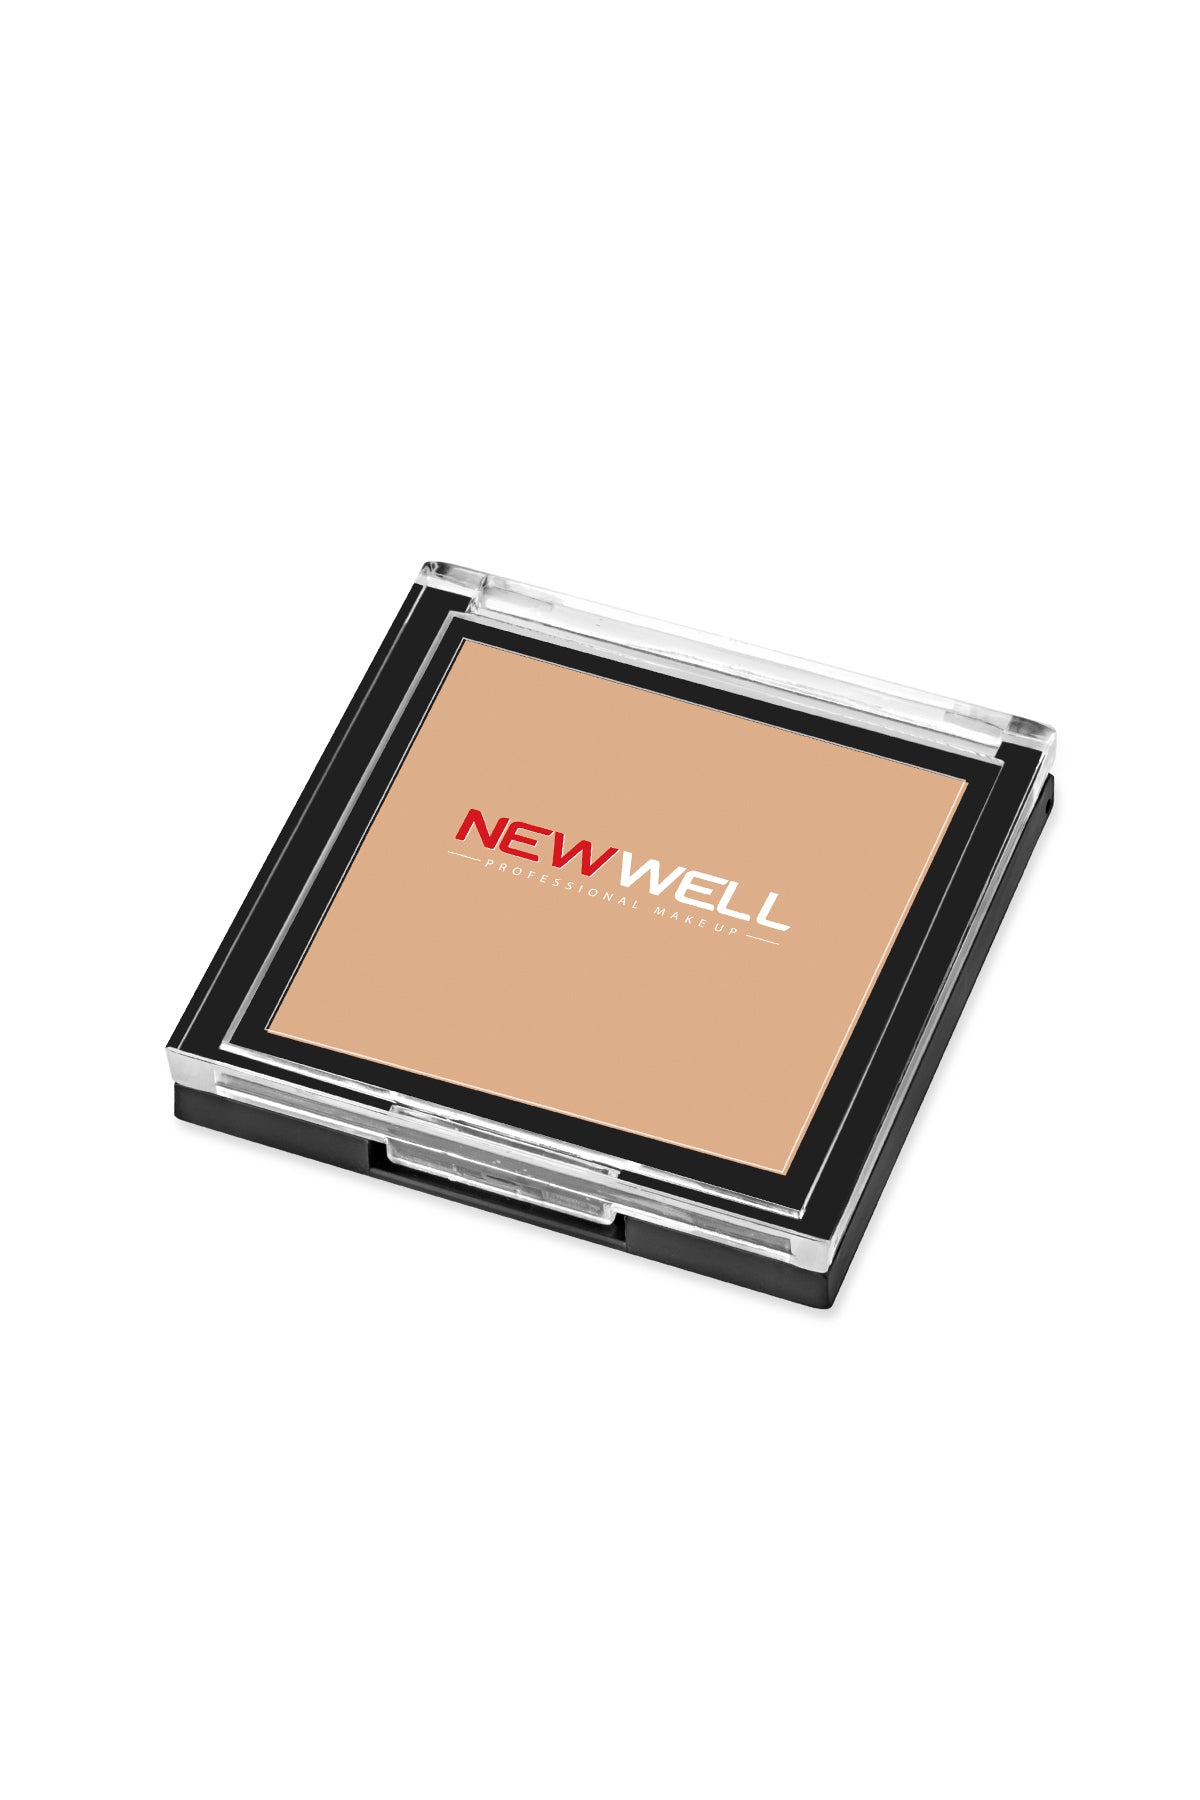 NEWWELL Make-Up Powder 01 7gr.